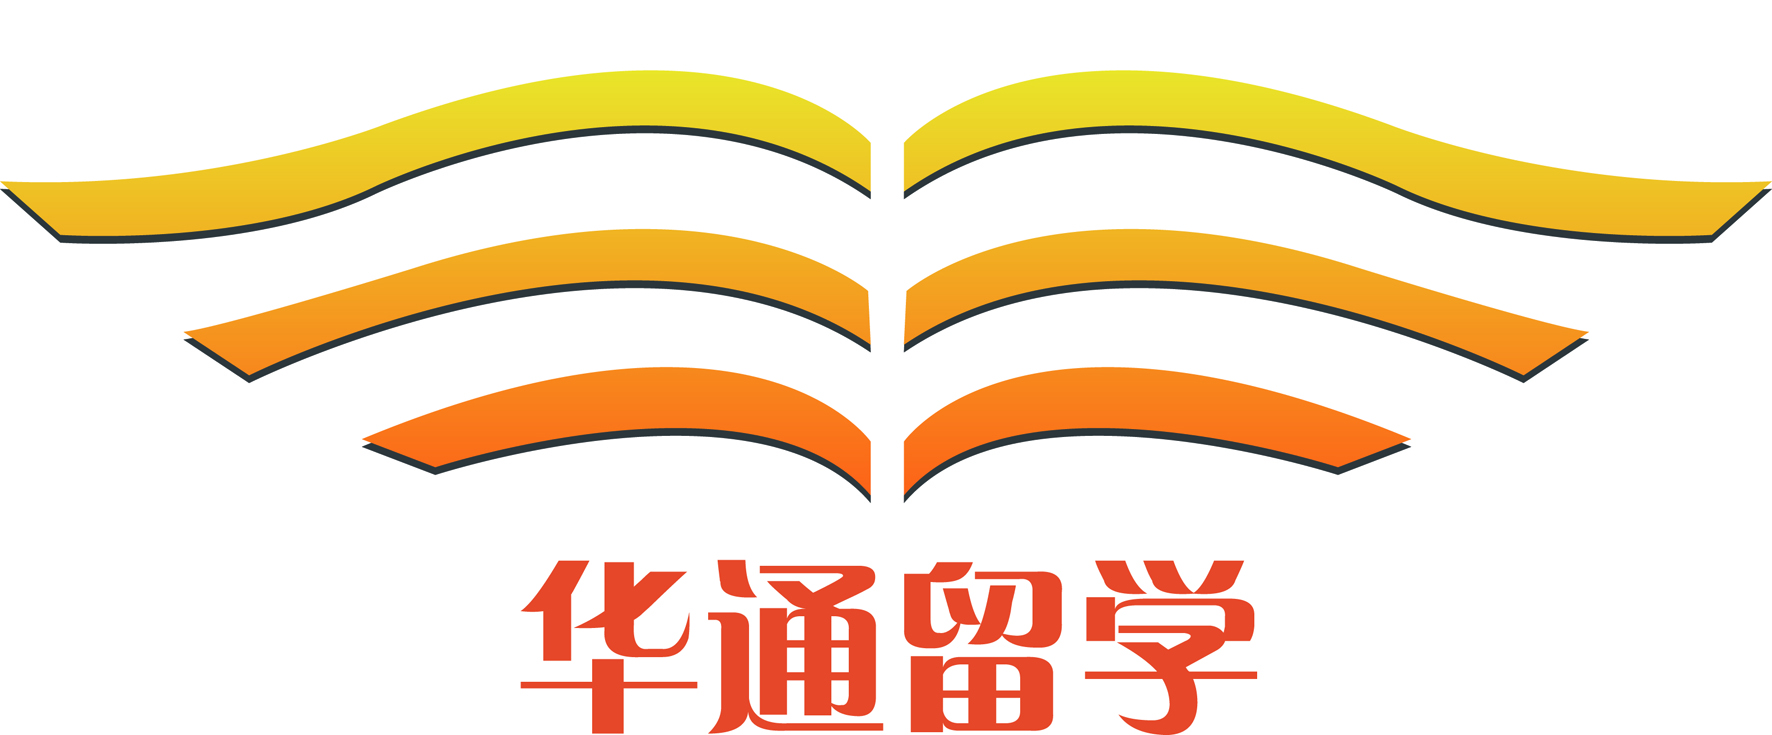 Logo Agents IAE China.jpg